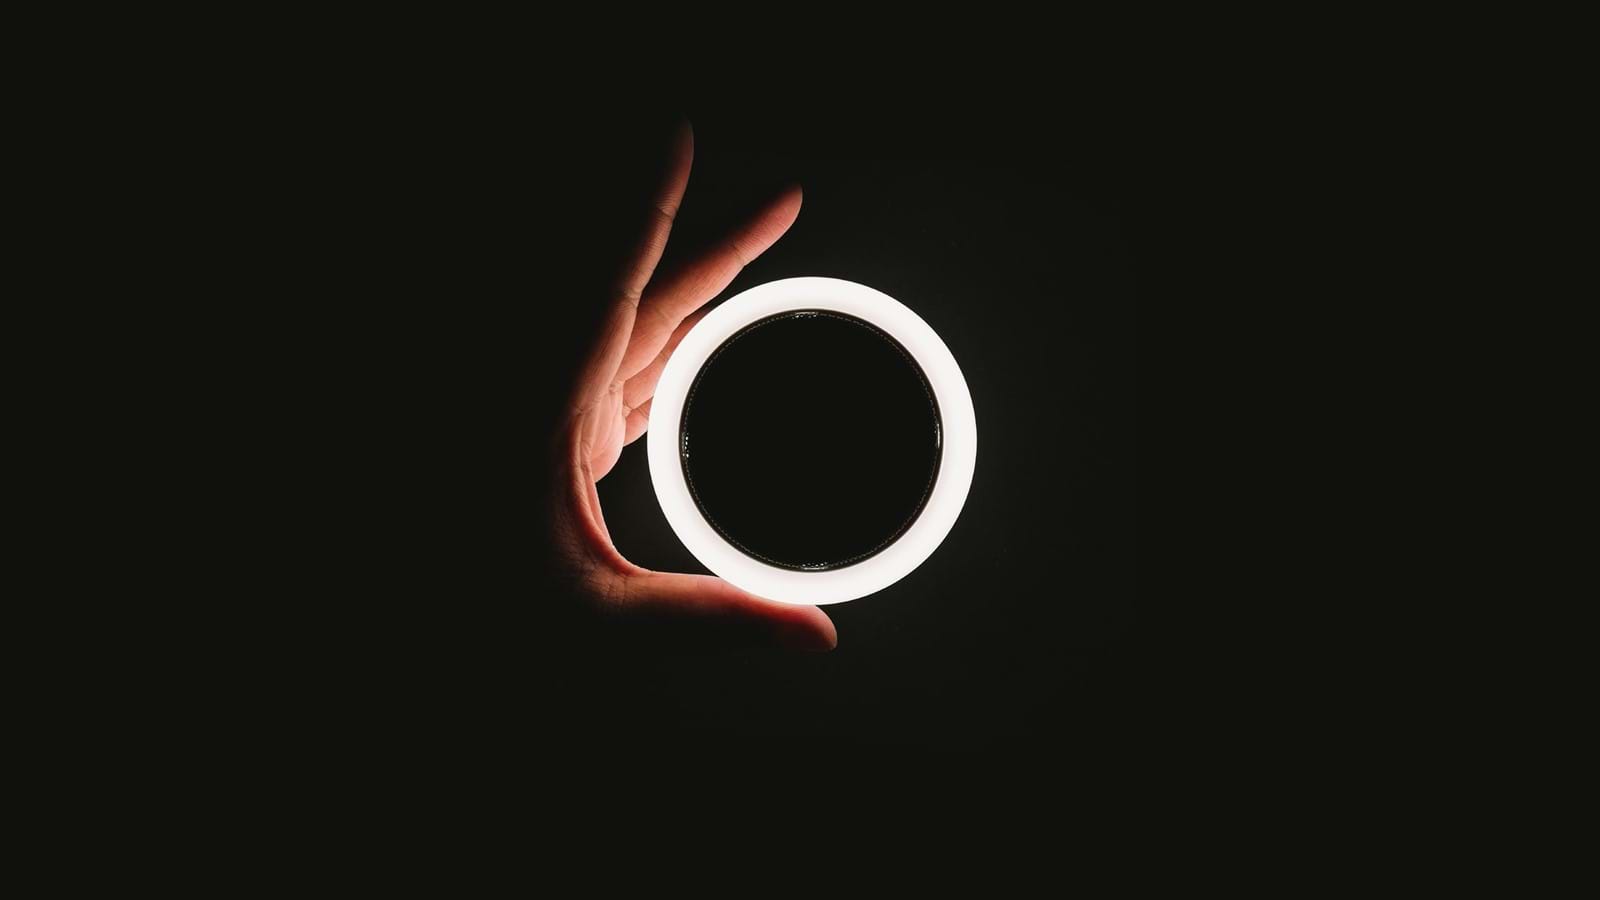 Light ring representing Intranet 2.0